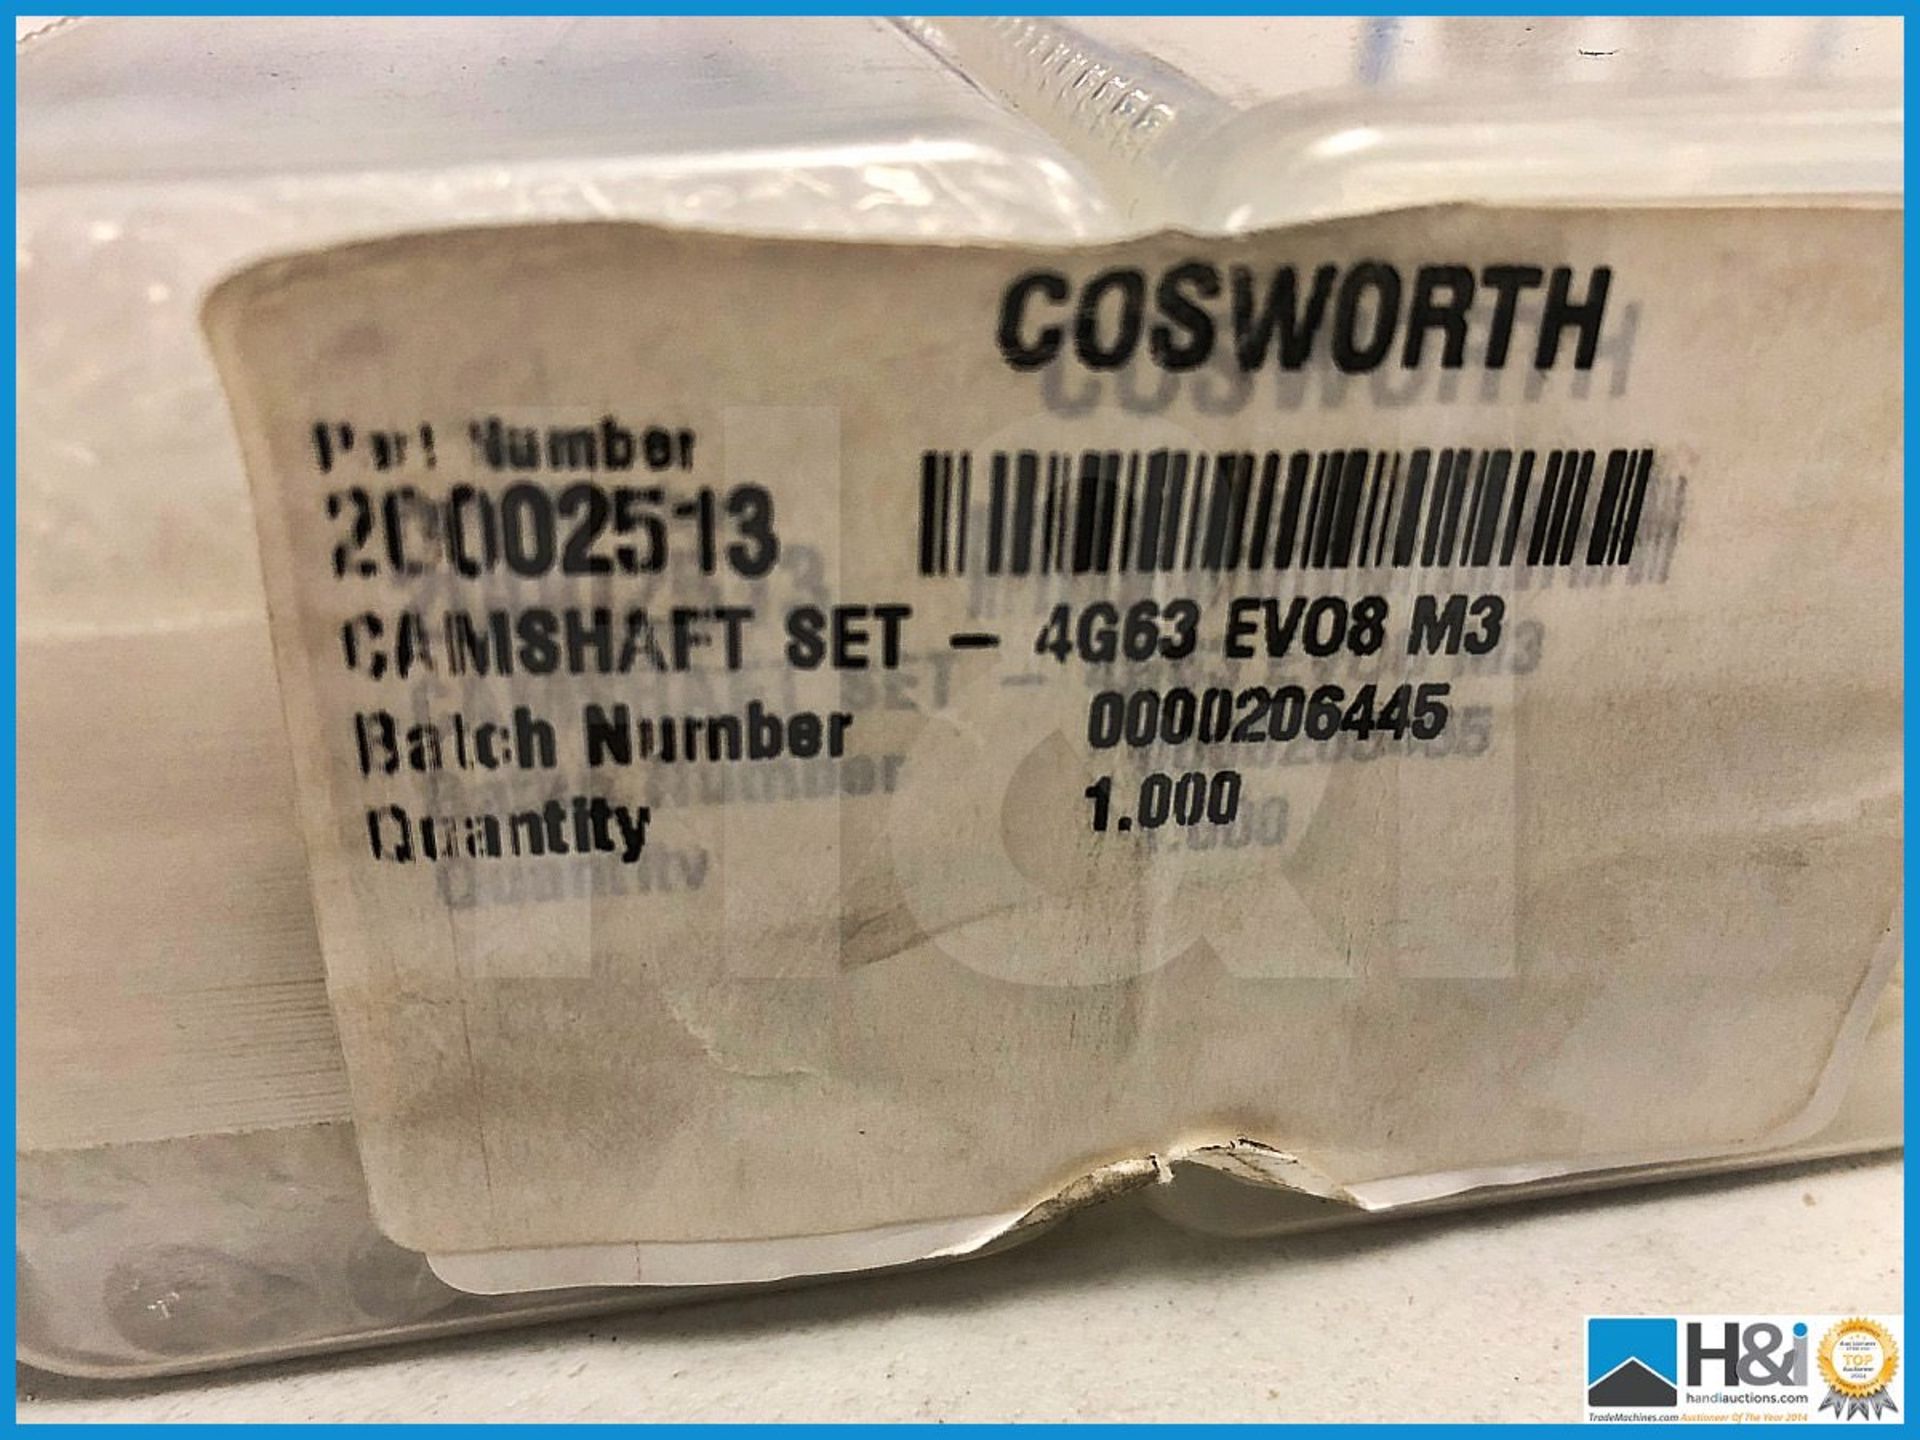 Cosworth Mitsubishi Evo 4G63 Evo8 M3 camshaft set. Code: 20002513 - Image 2 of 3